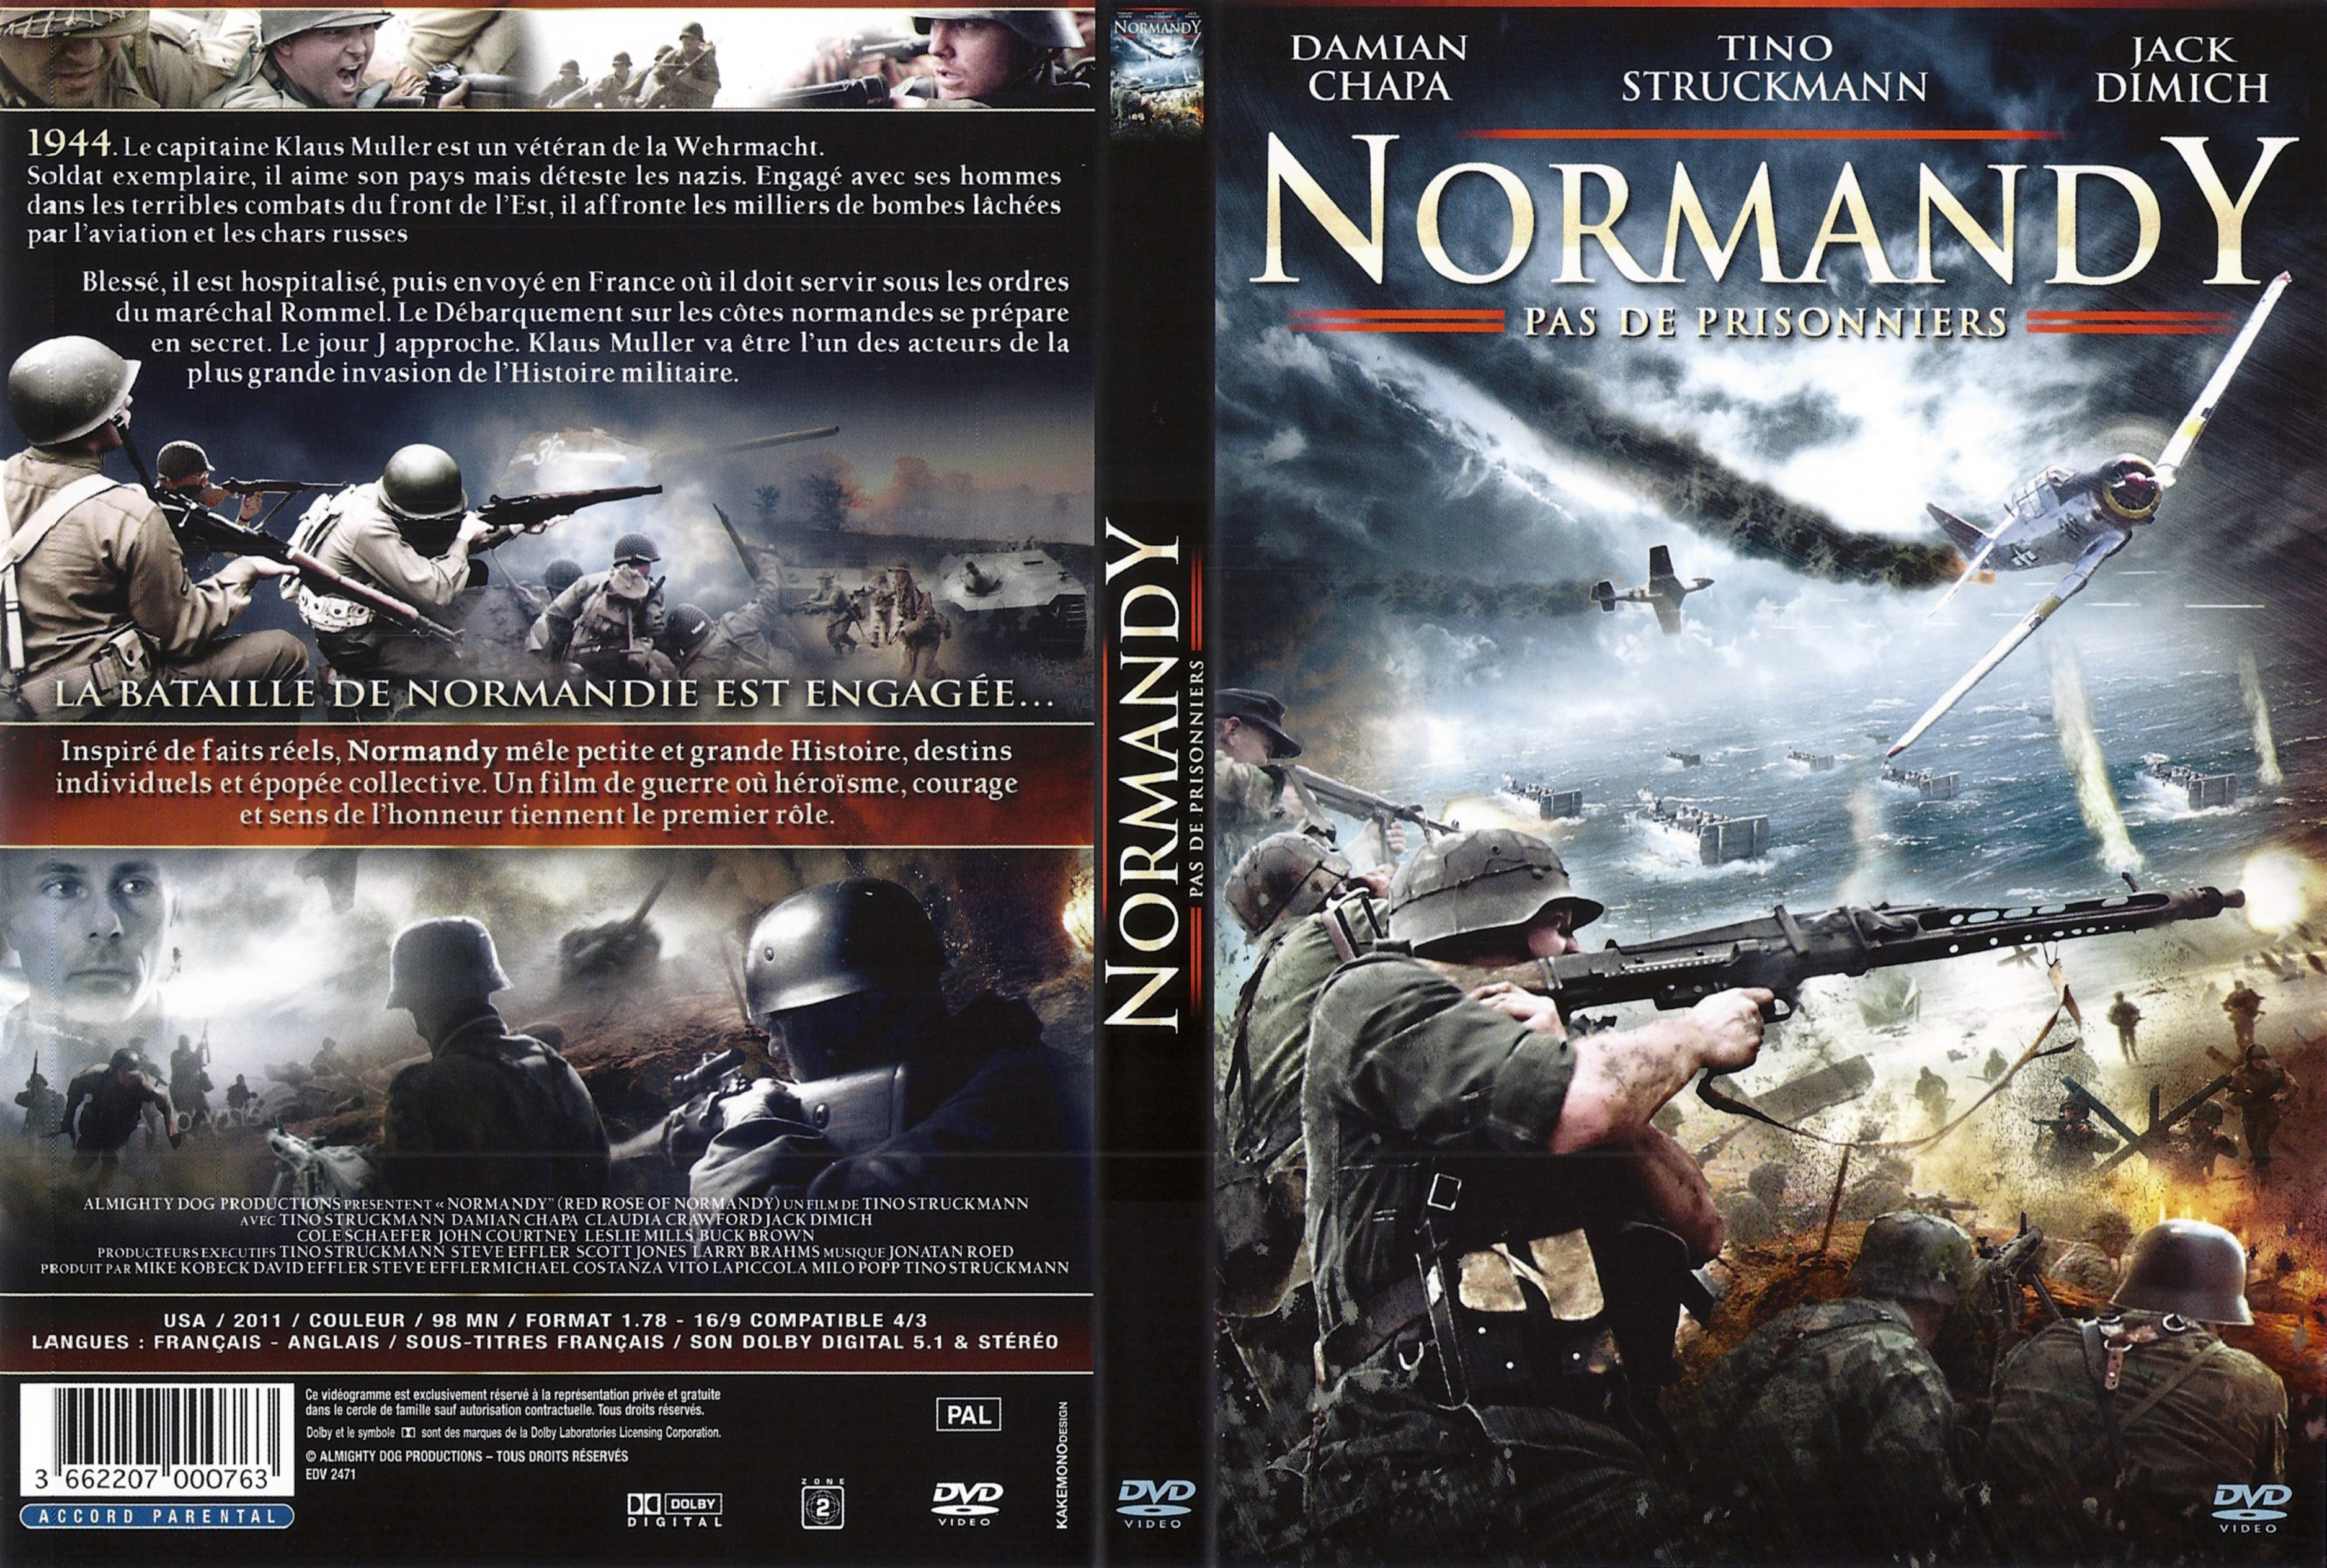 Jaquette DVD Normandy